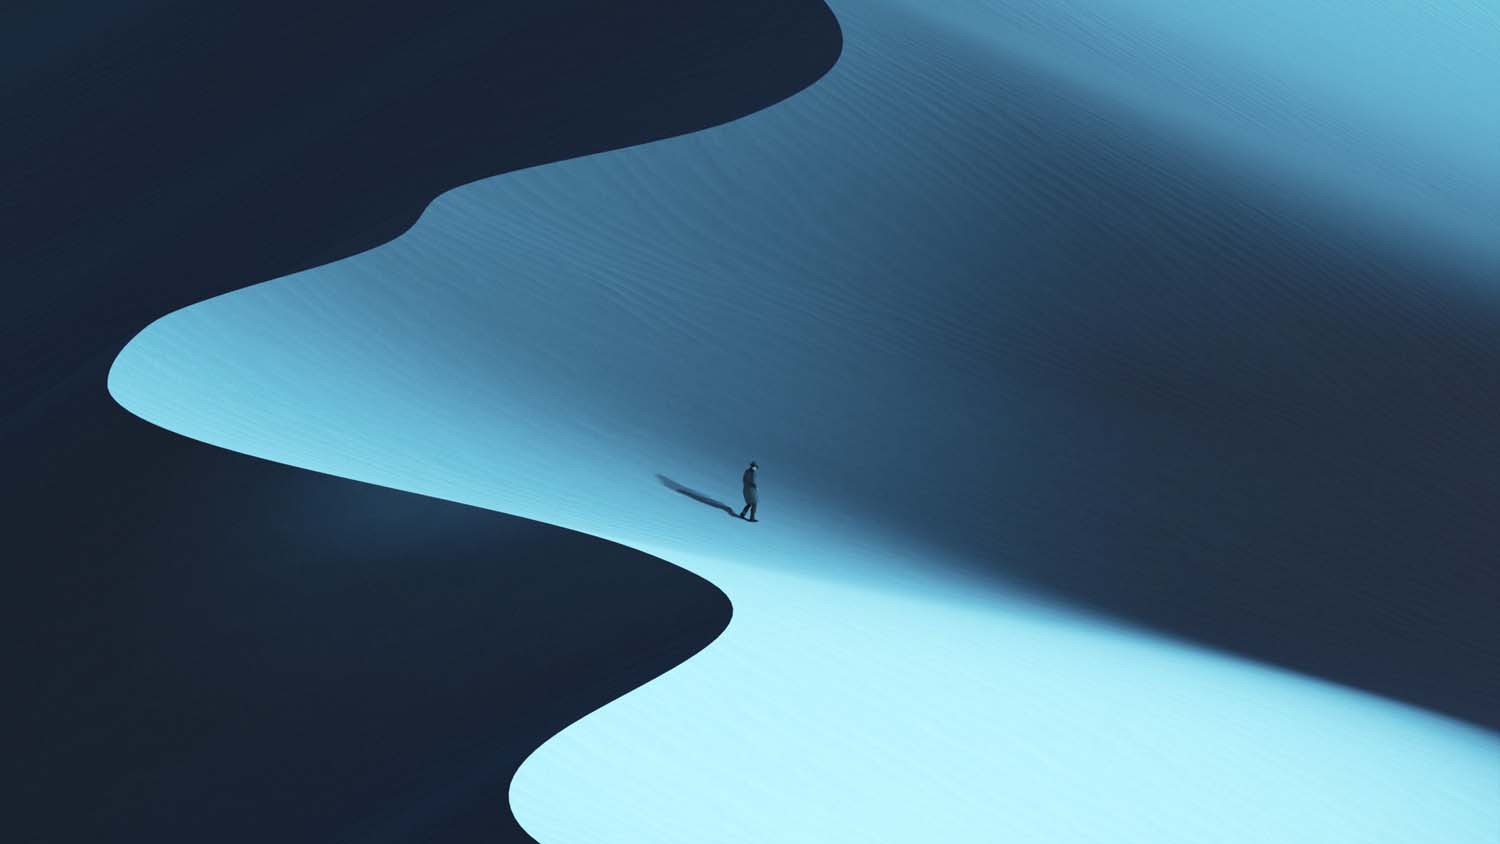 digital artartwork illustration nature landscape desert dunes sand men alone minimalism shadow macbook wallpaper